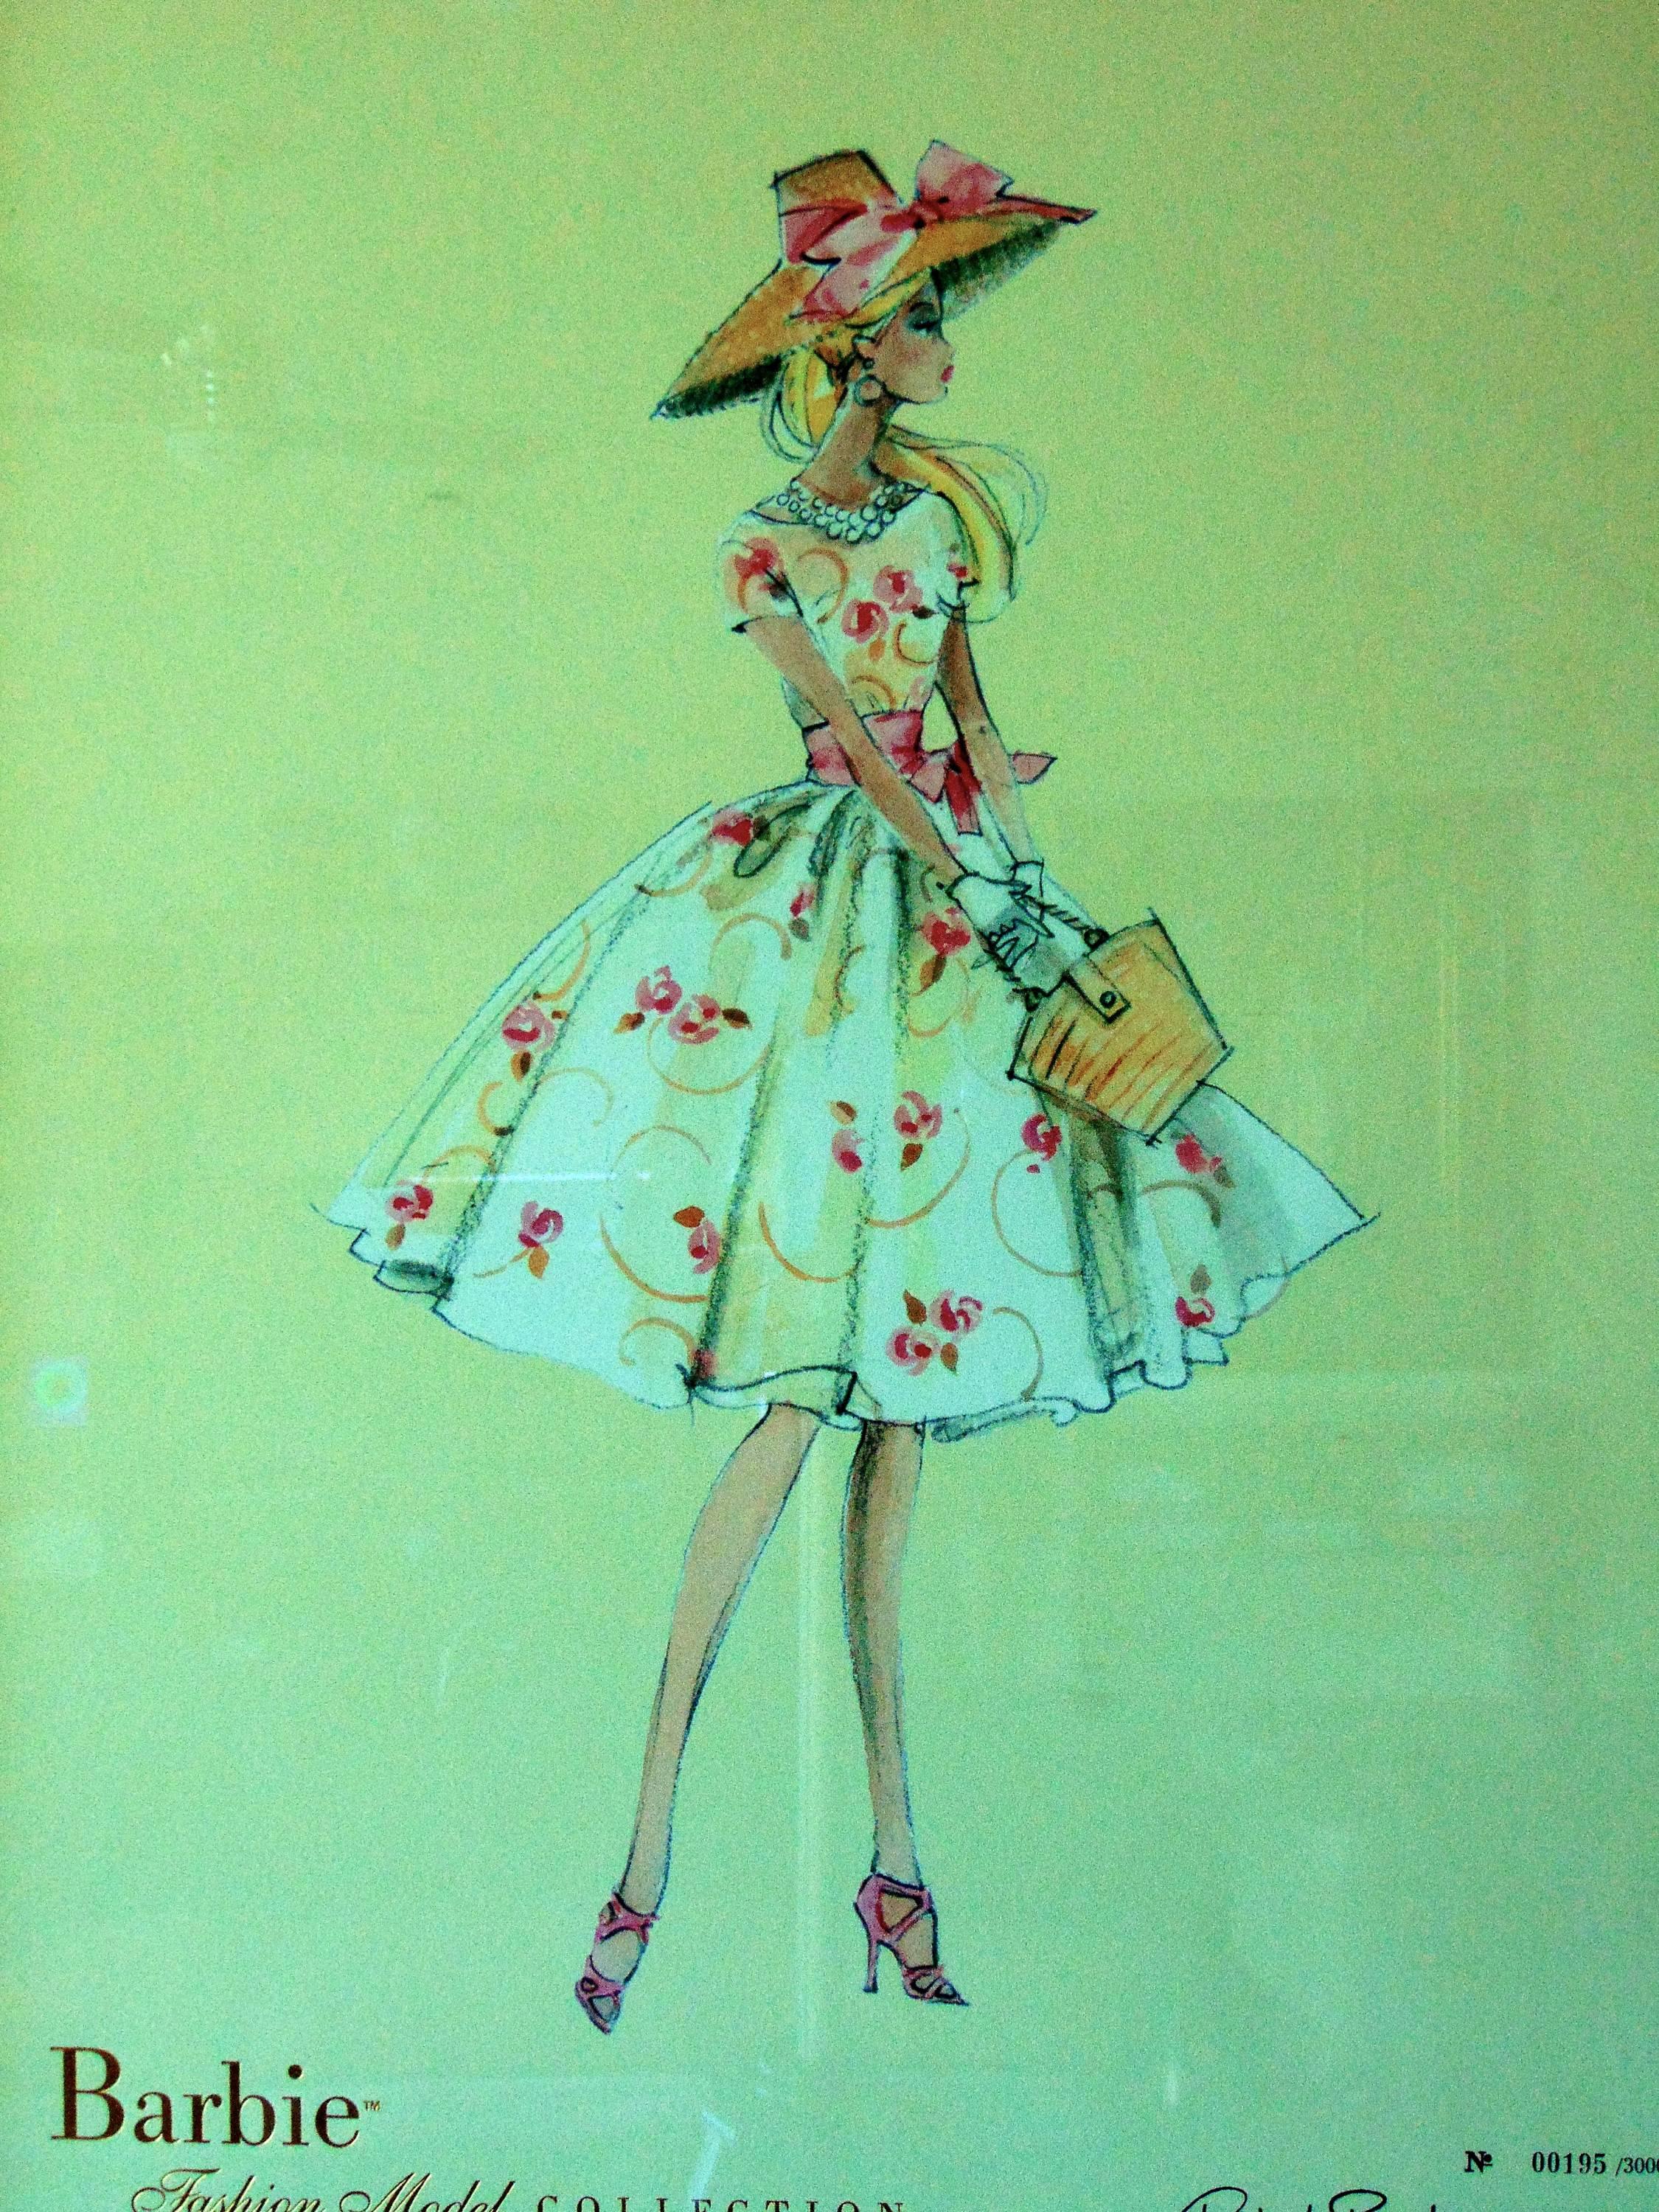 barbie fashion model collection prints